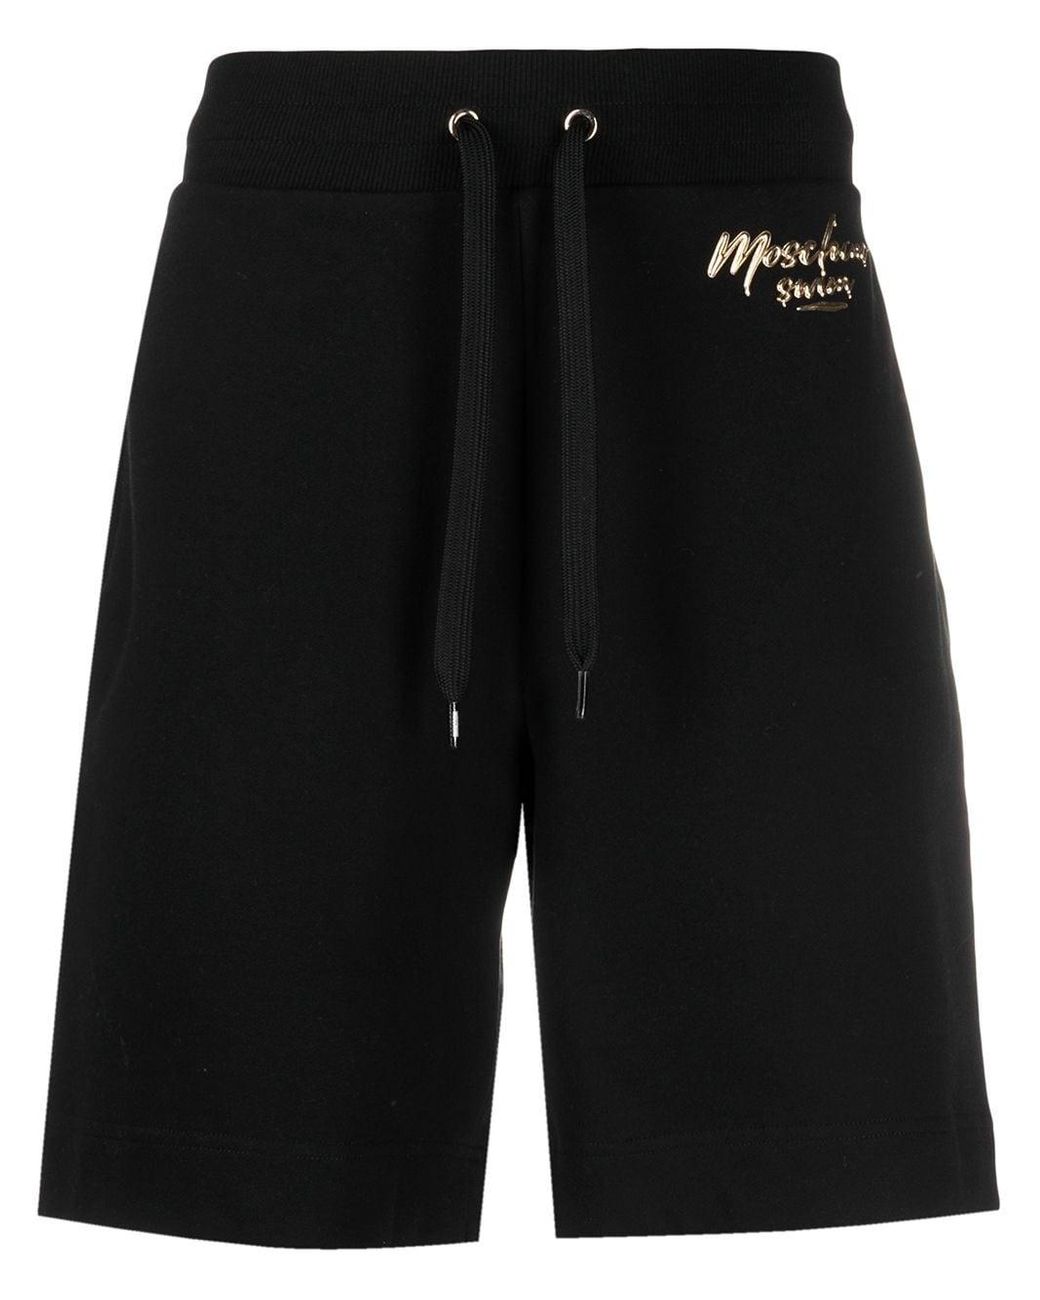 Moschino Swim Cotton Track Shorts in Black for Men - Lyst